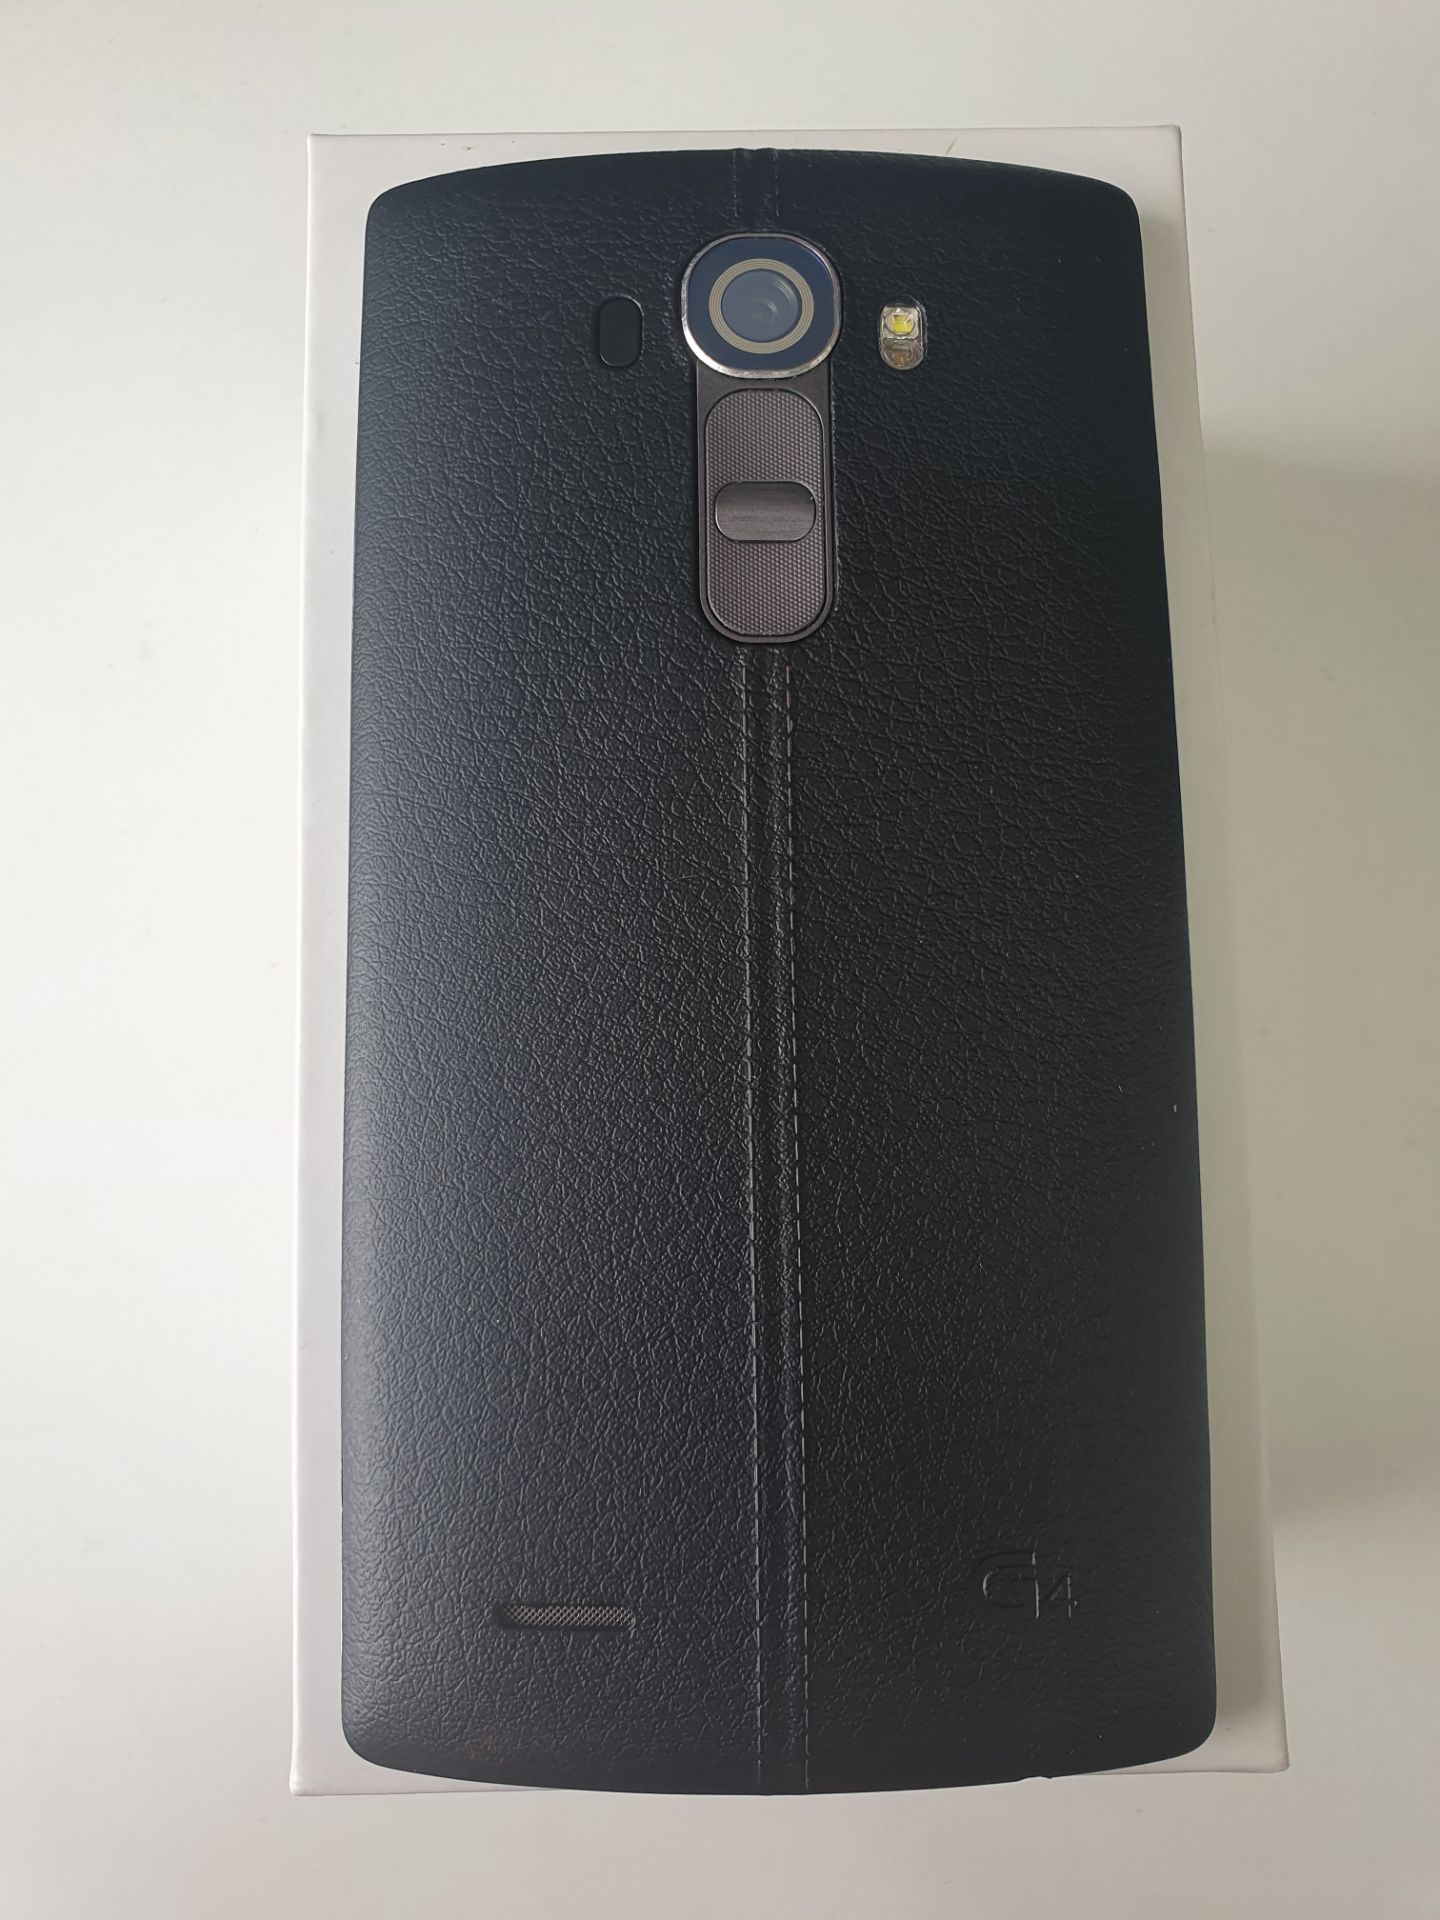 Ex-Display LG G4 Smartphone - Image 2 of 2